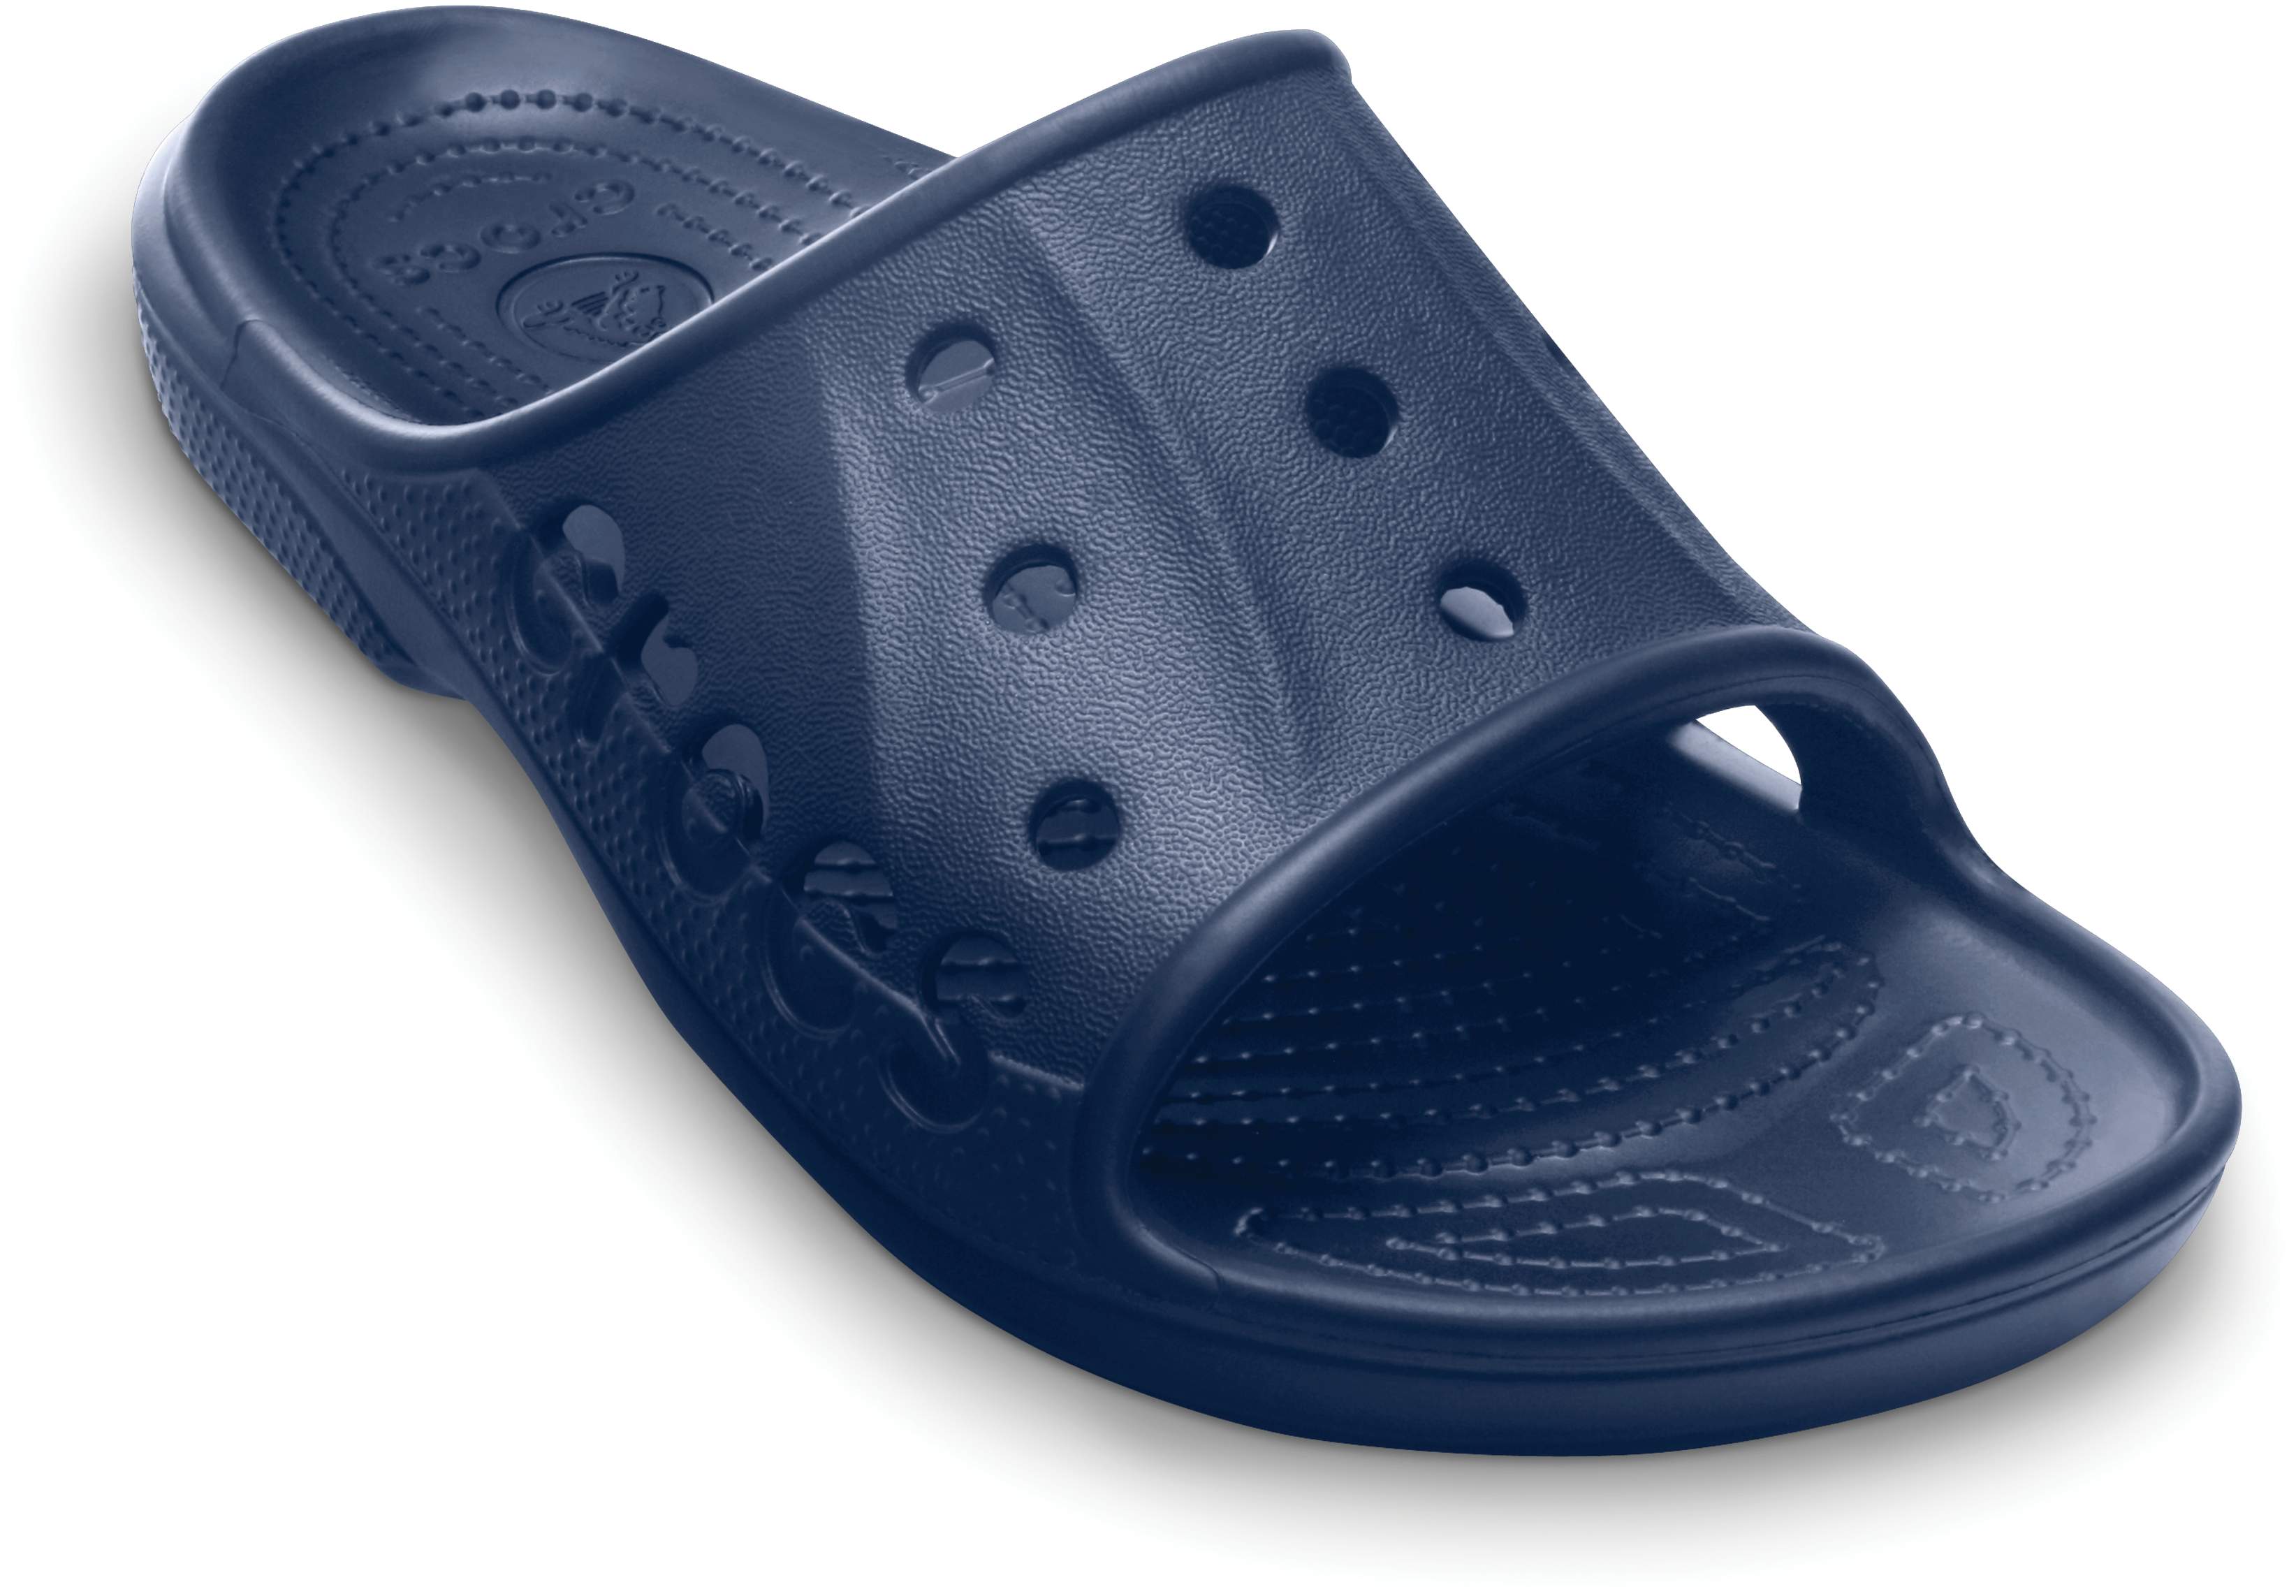 crocs slides blue